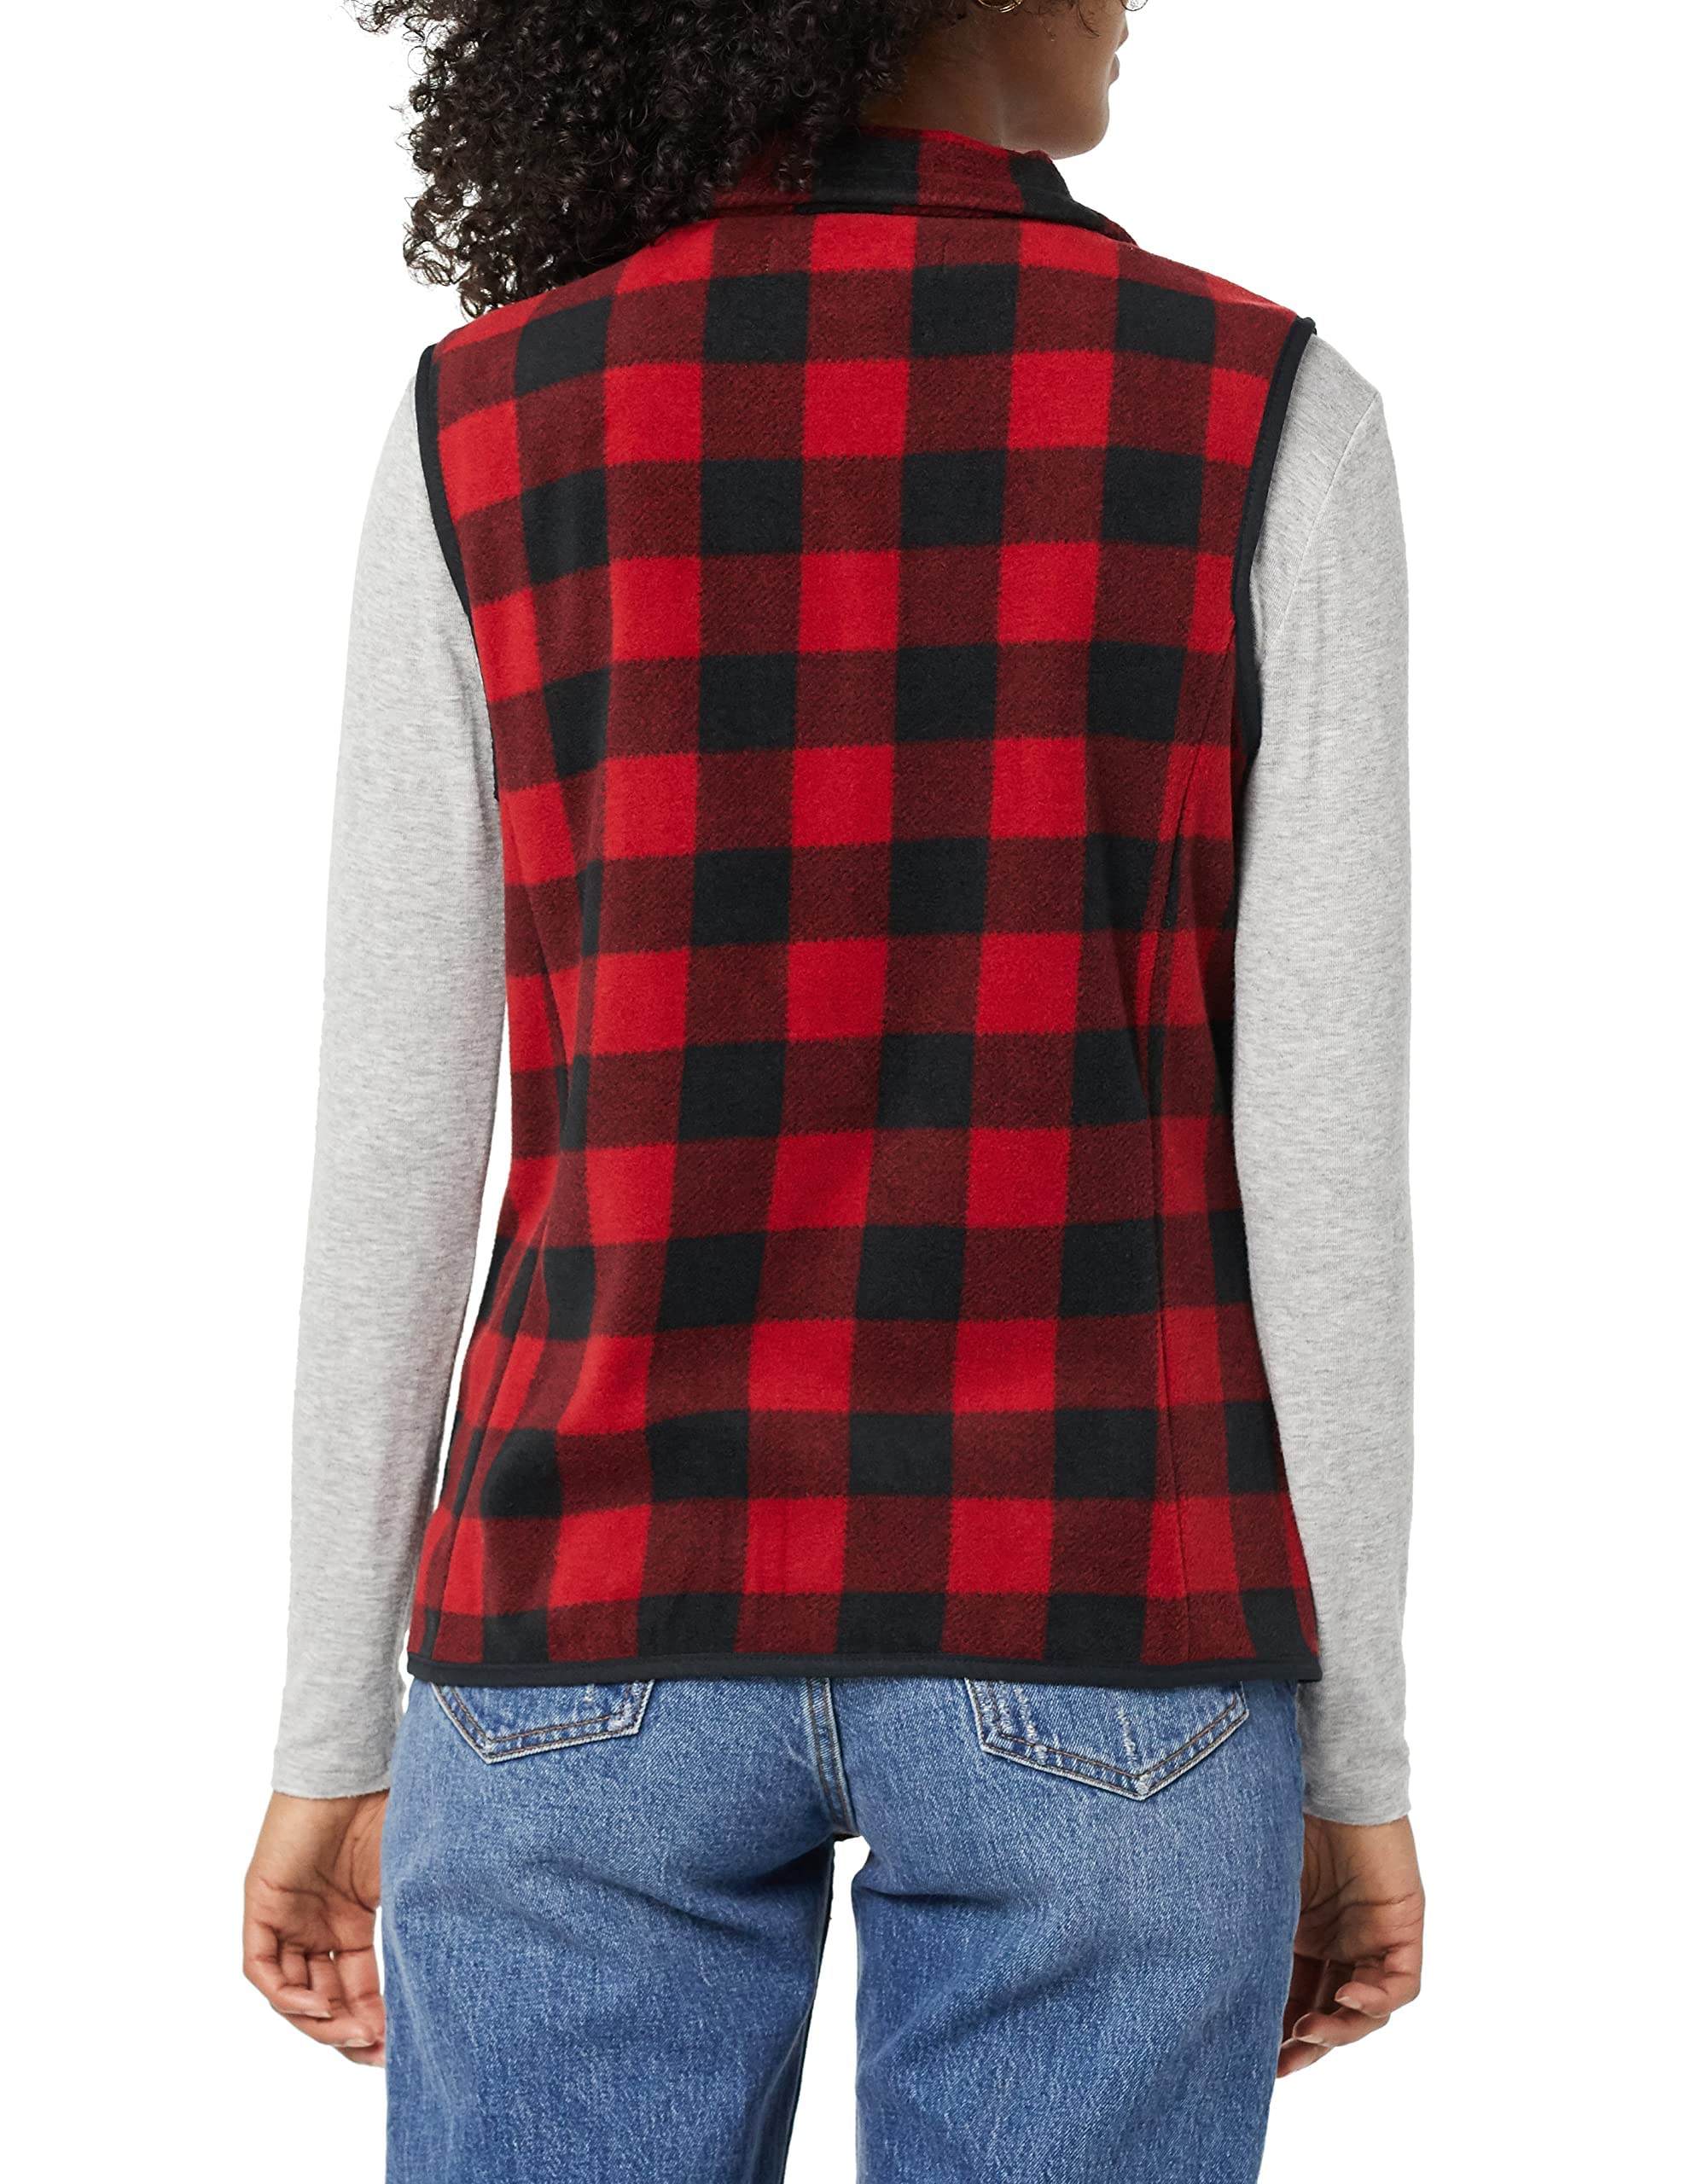 Amazon Essentials Women's Classic-Fit Sleeveless Polar Soft Fleece Vest (Available in Plus Size)